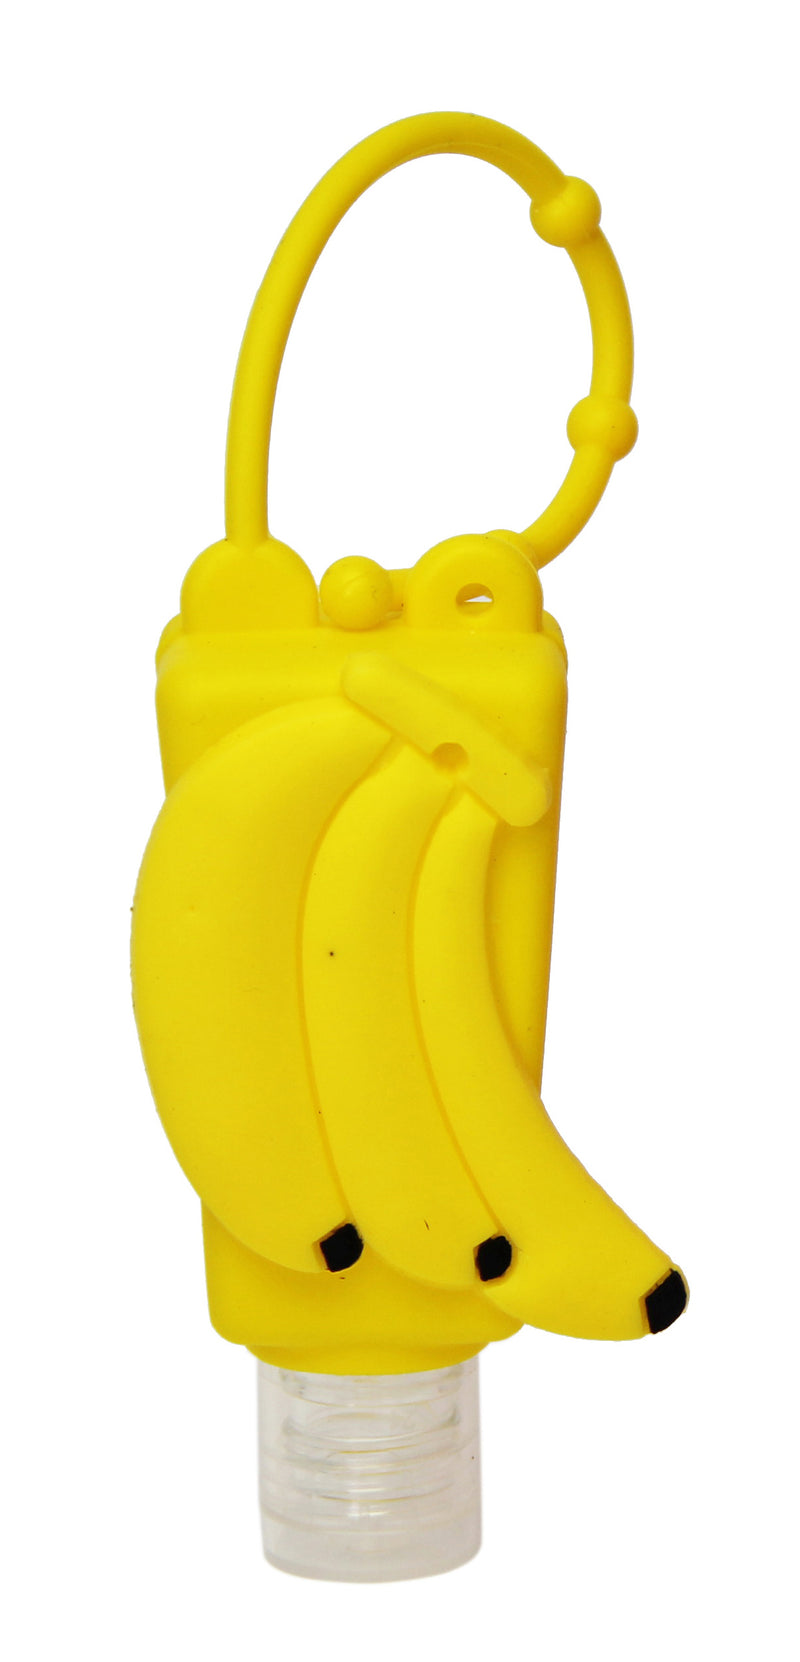 Jeronimo Squeezy Sanitizer - Banana